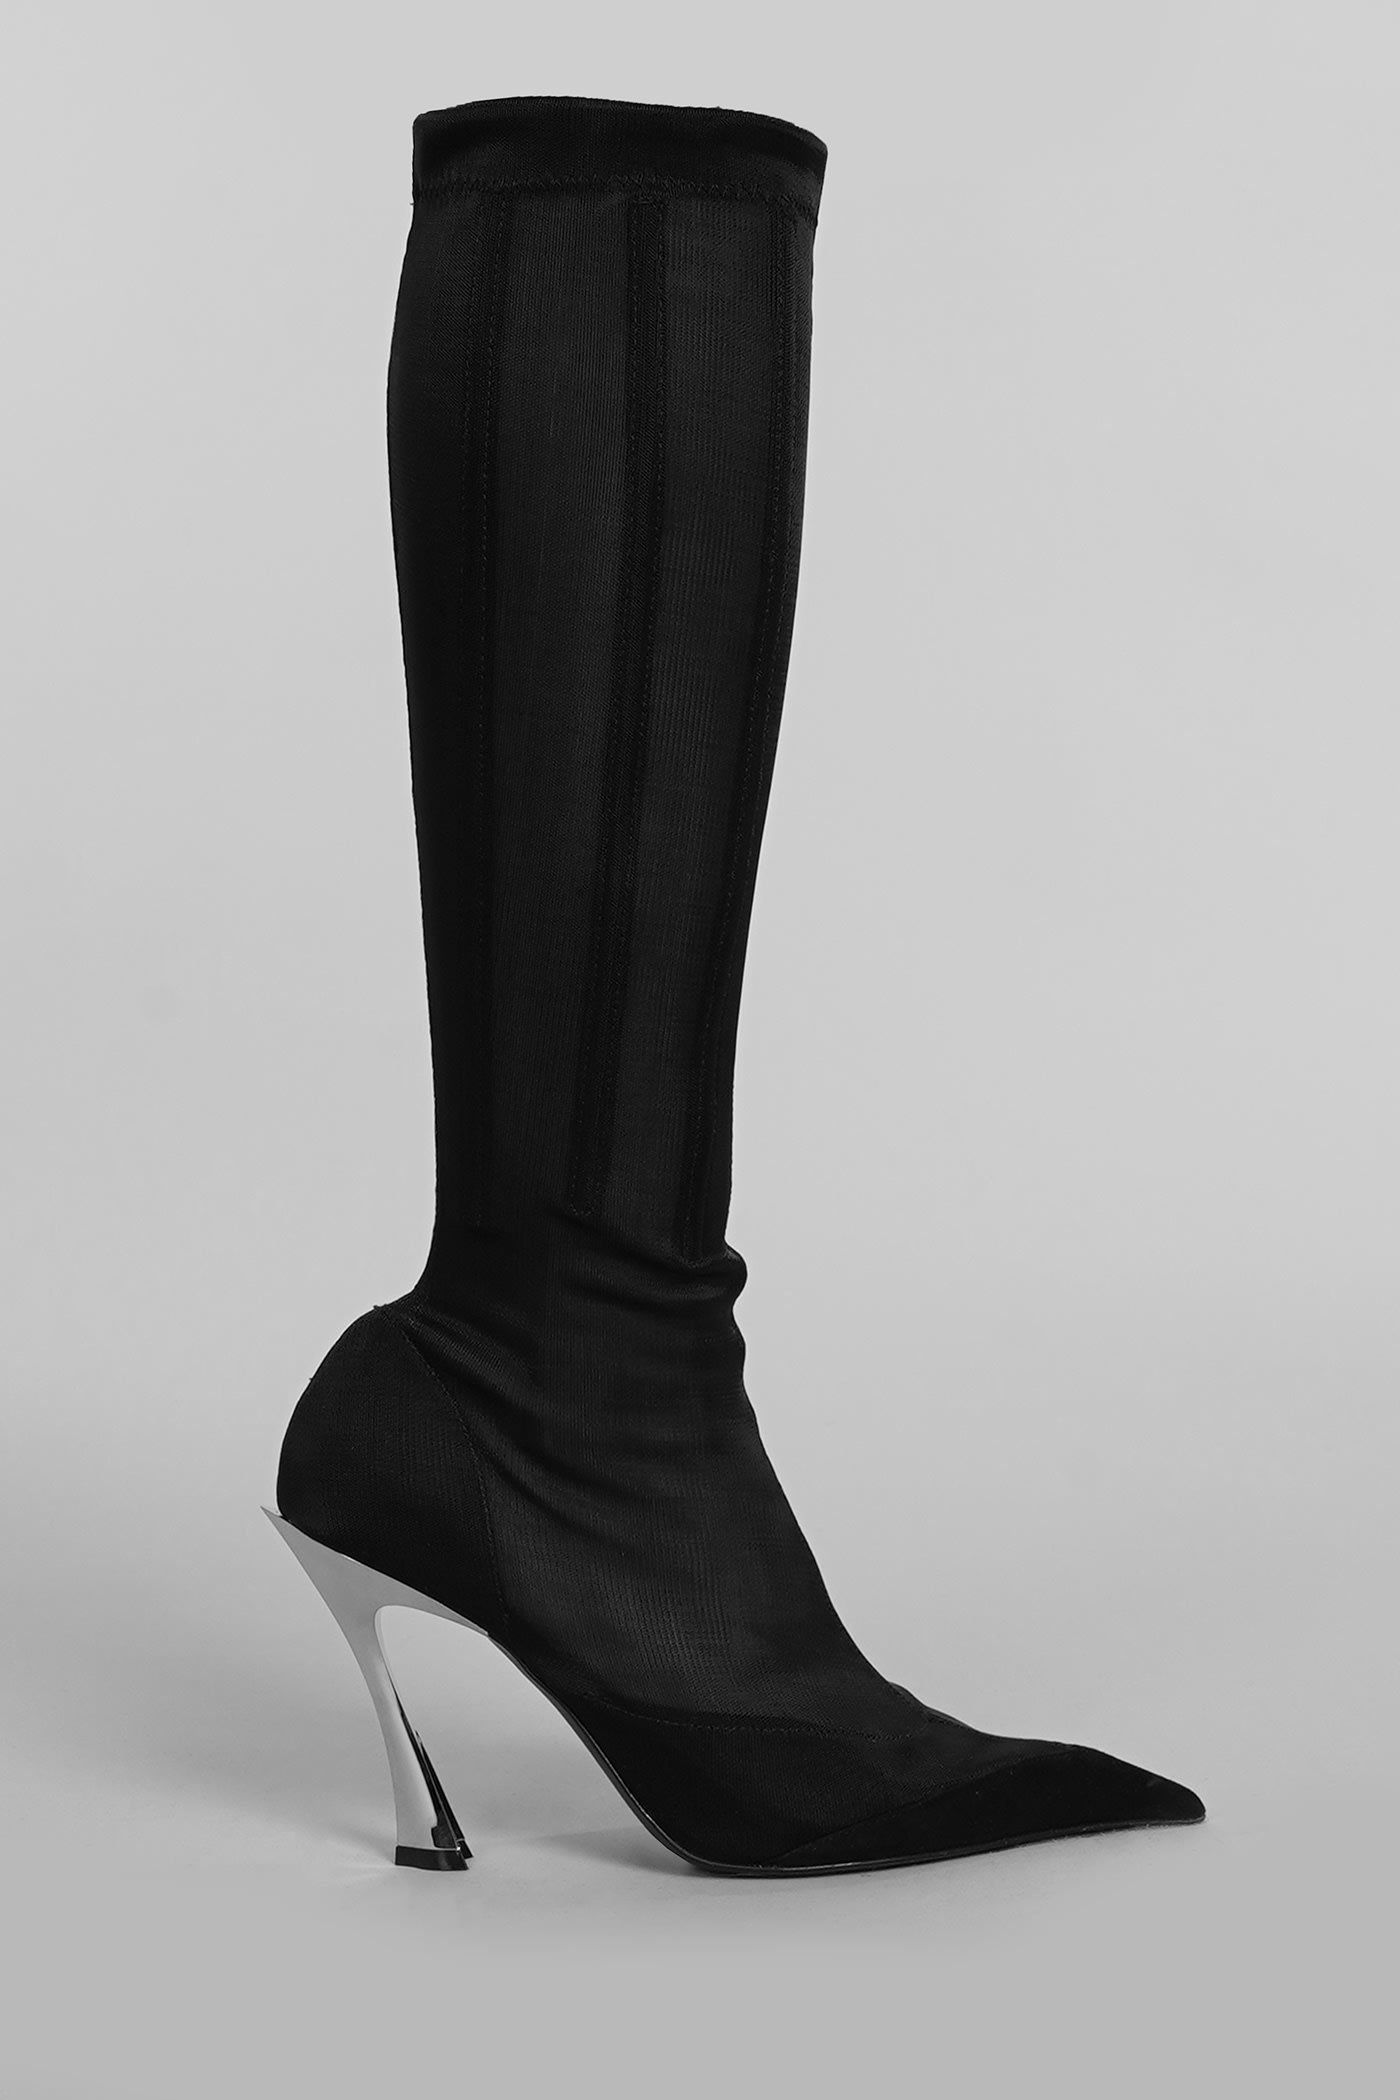 High Heels Boots In Black Nylon